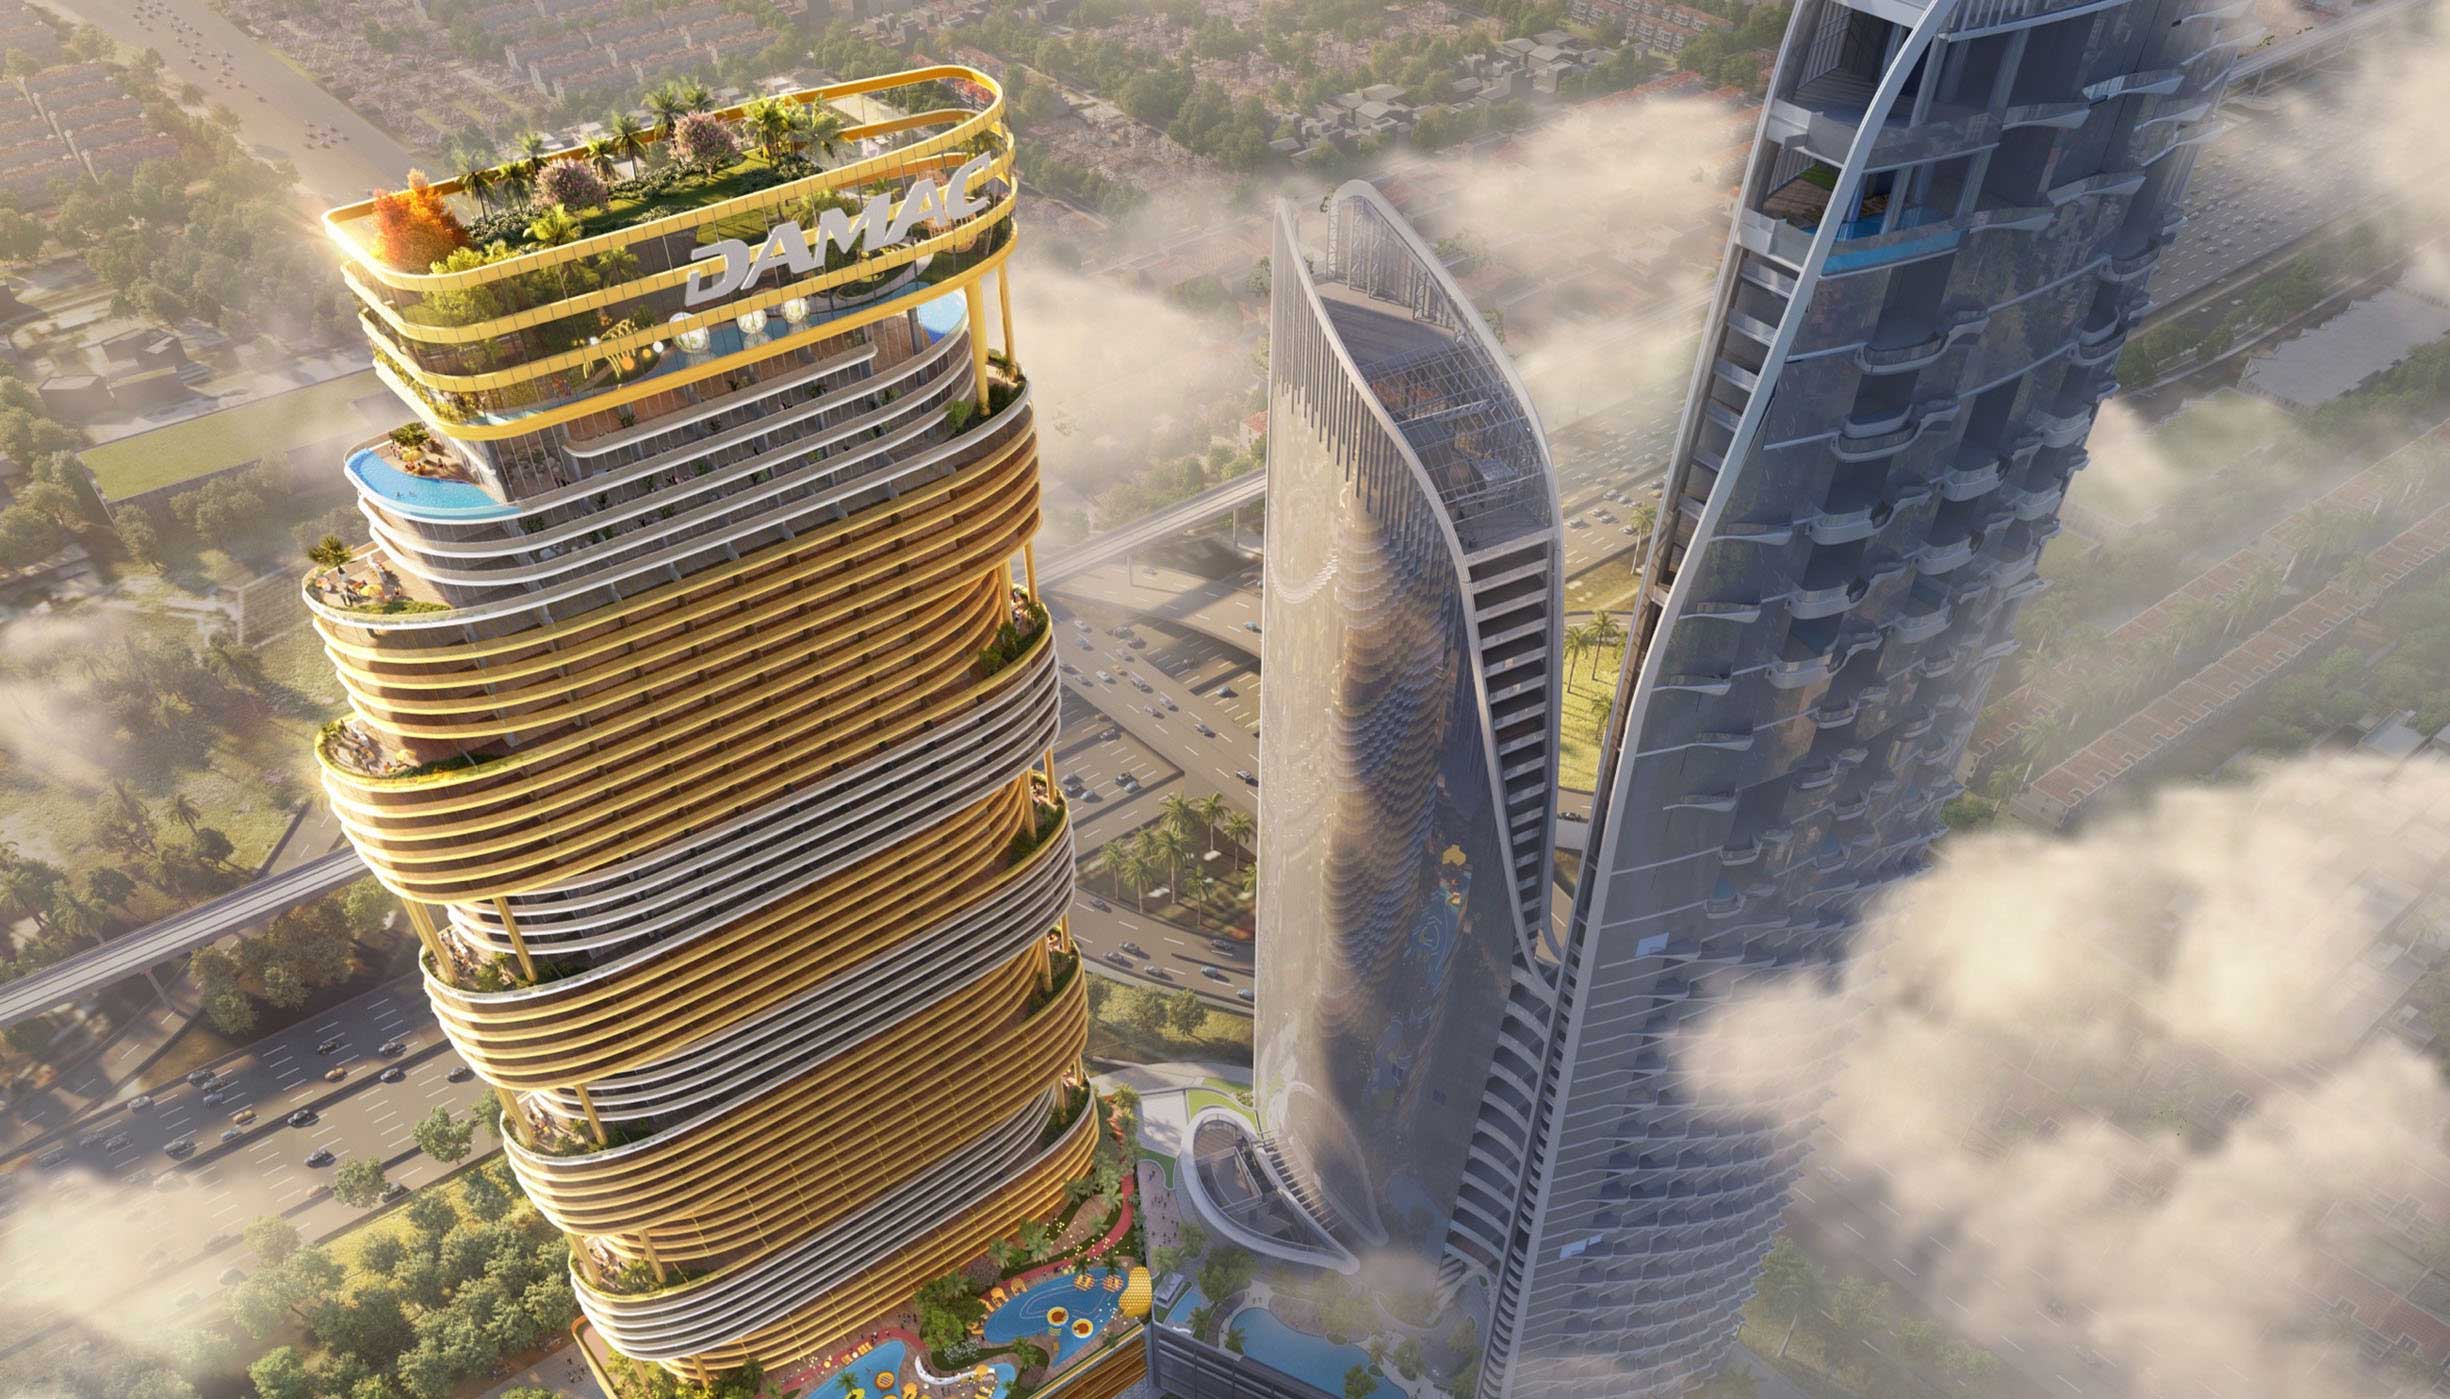 'The Sapphire' by DAMAC Properties on Sheikh Zayed Road, Dubai